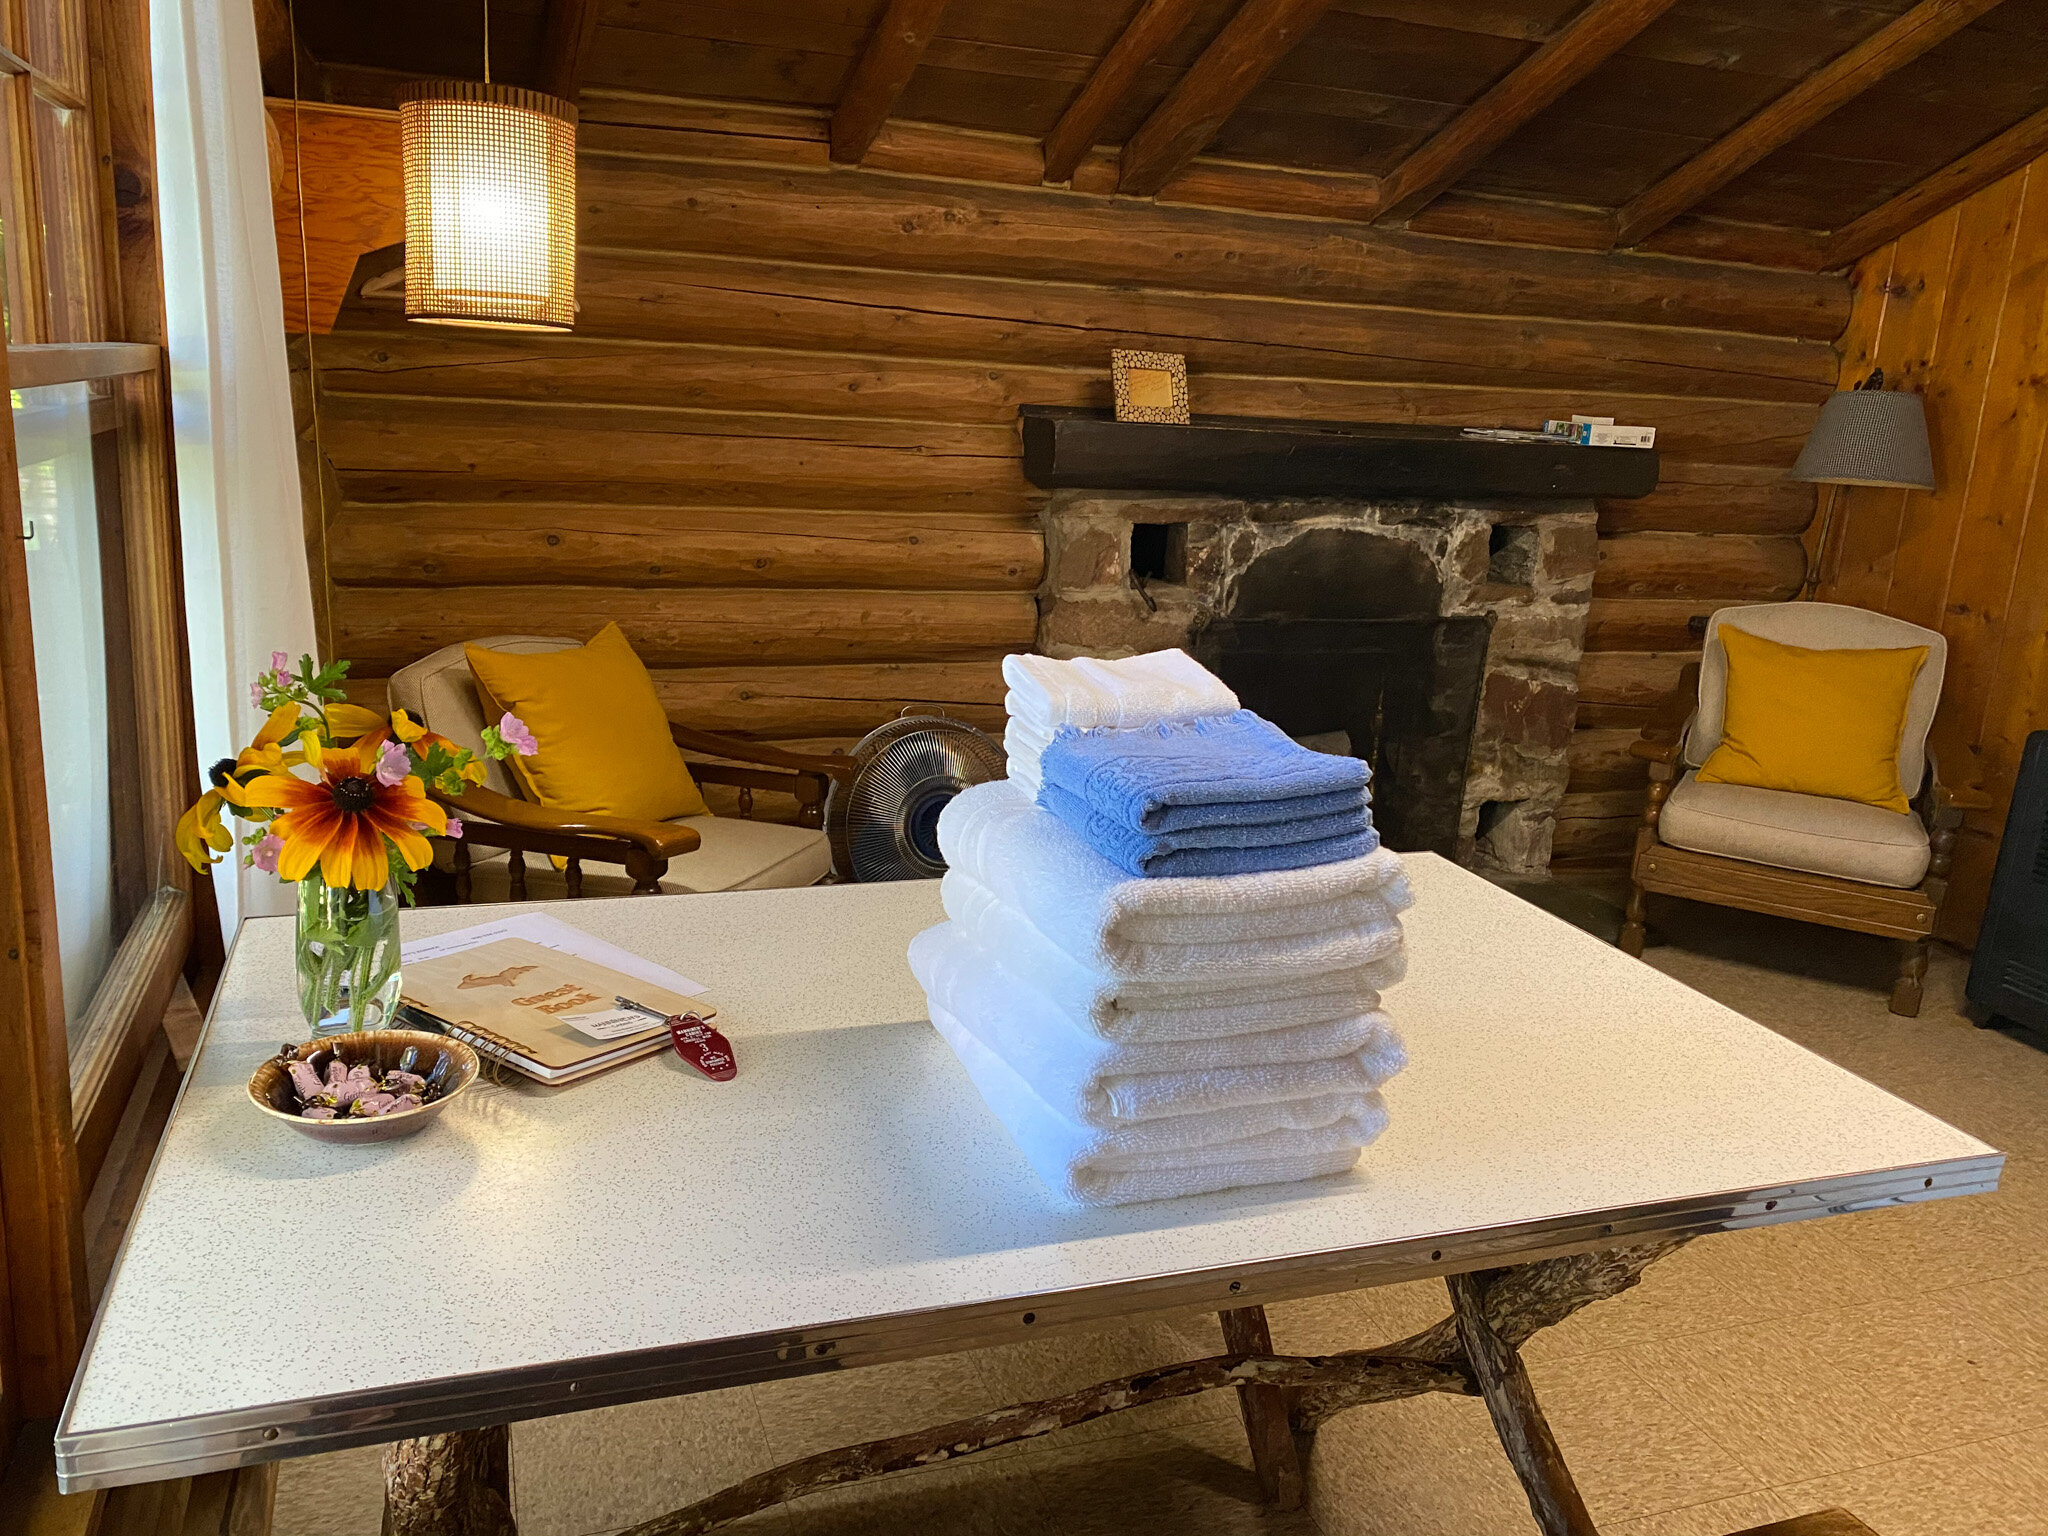 Manninen's Cabins, Otter Lake cabin rentals: Kolme log cabin